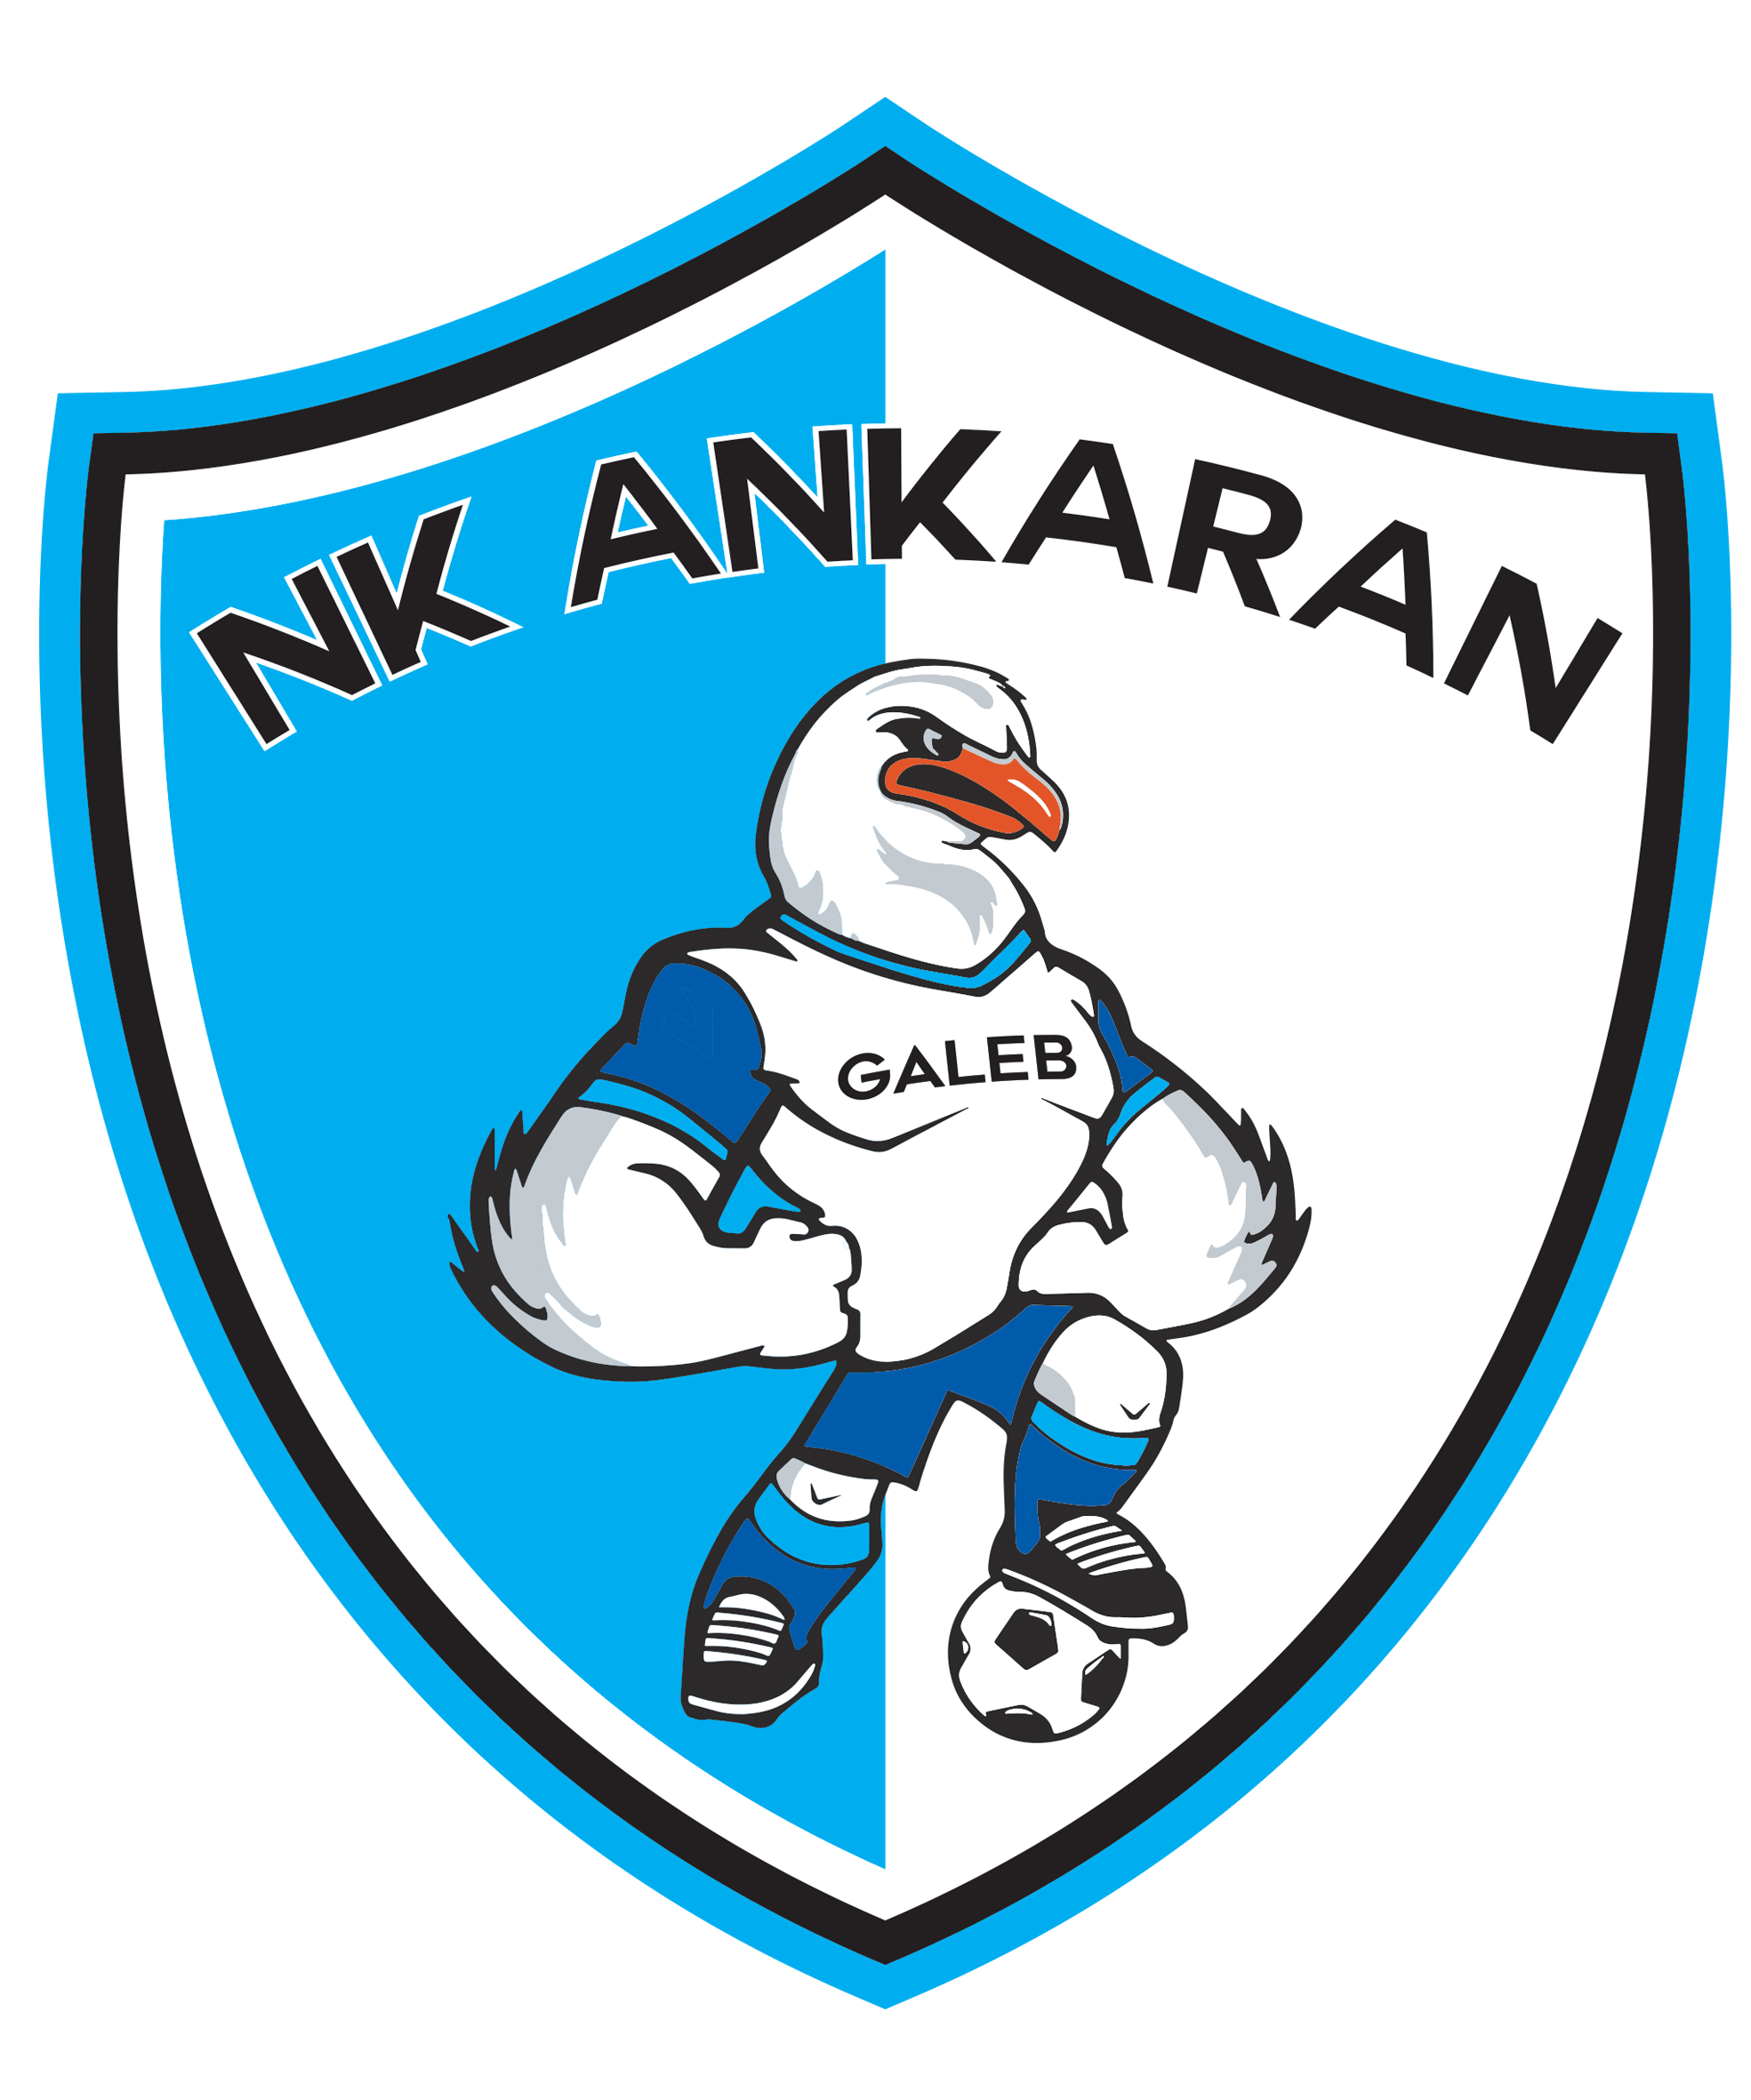 nk-ankaran-logo.png